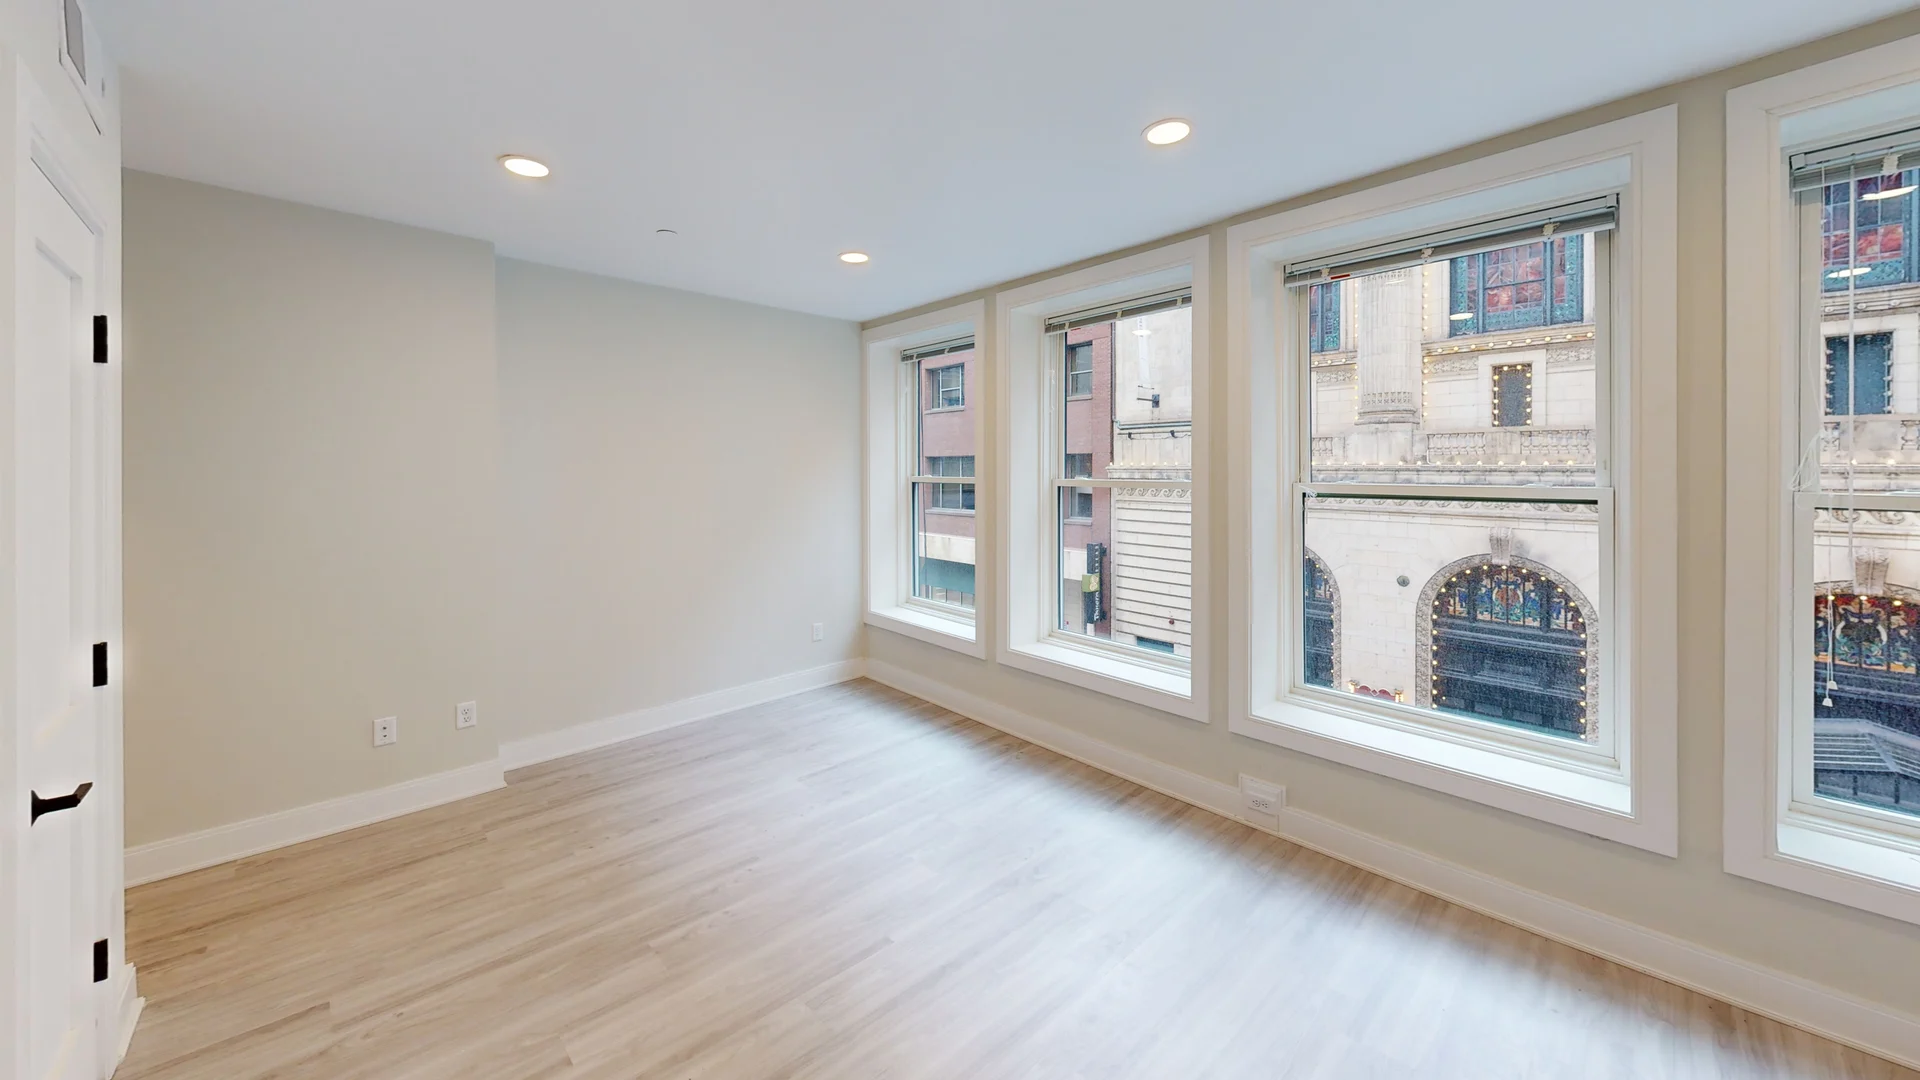 Photos of apartment on Tremont St.,Boston MA 02116